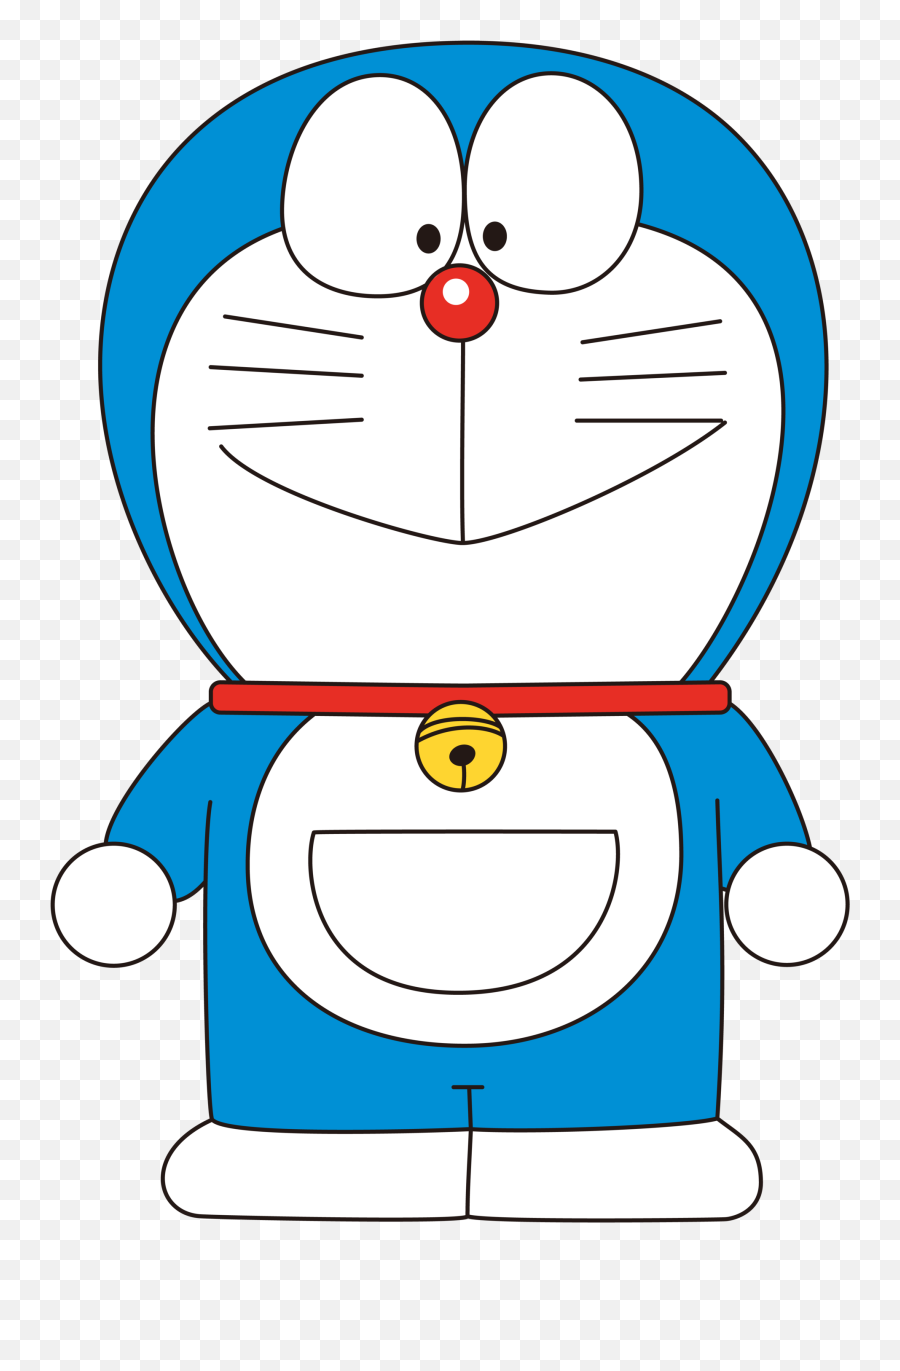 How to draw cartoon character shizuka from Doraemon|pencil sketch shizuka  drawing - YouTube